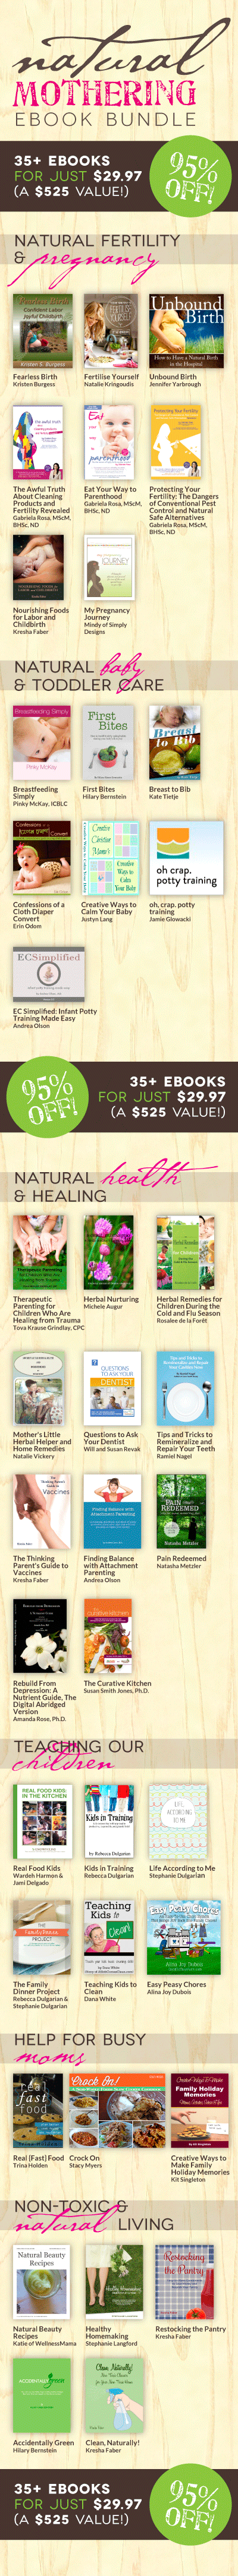 natural-mothering-book sale